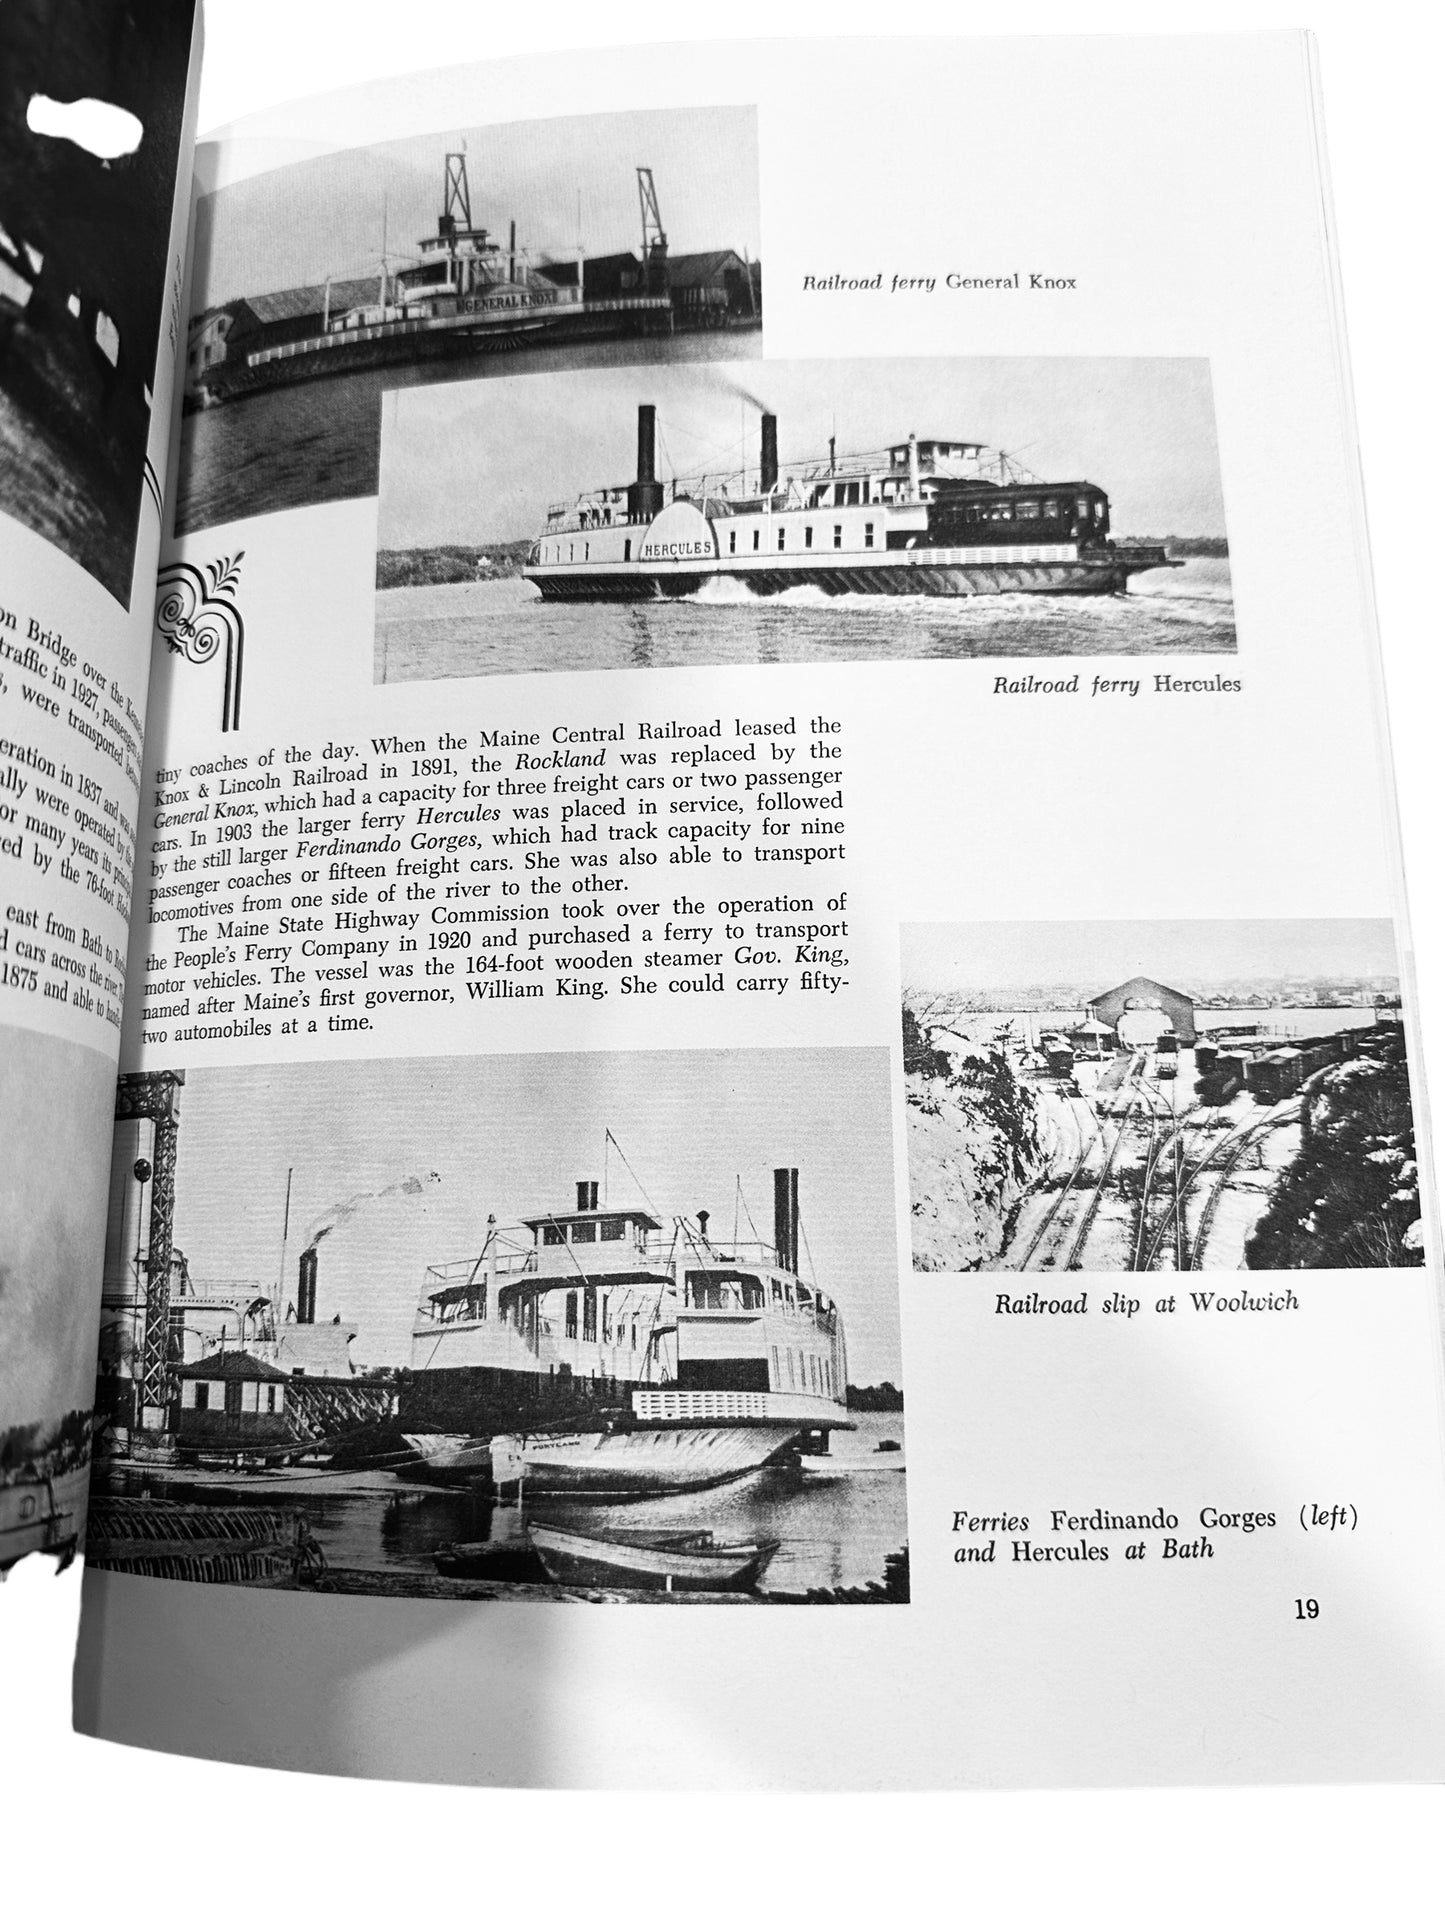 1971 Vintage Kennebec Steamboat Album of Boothbay Harbor